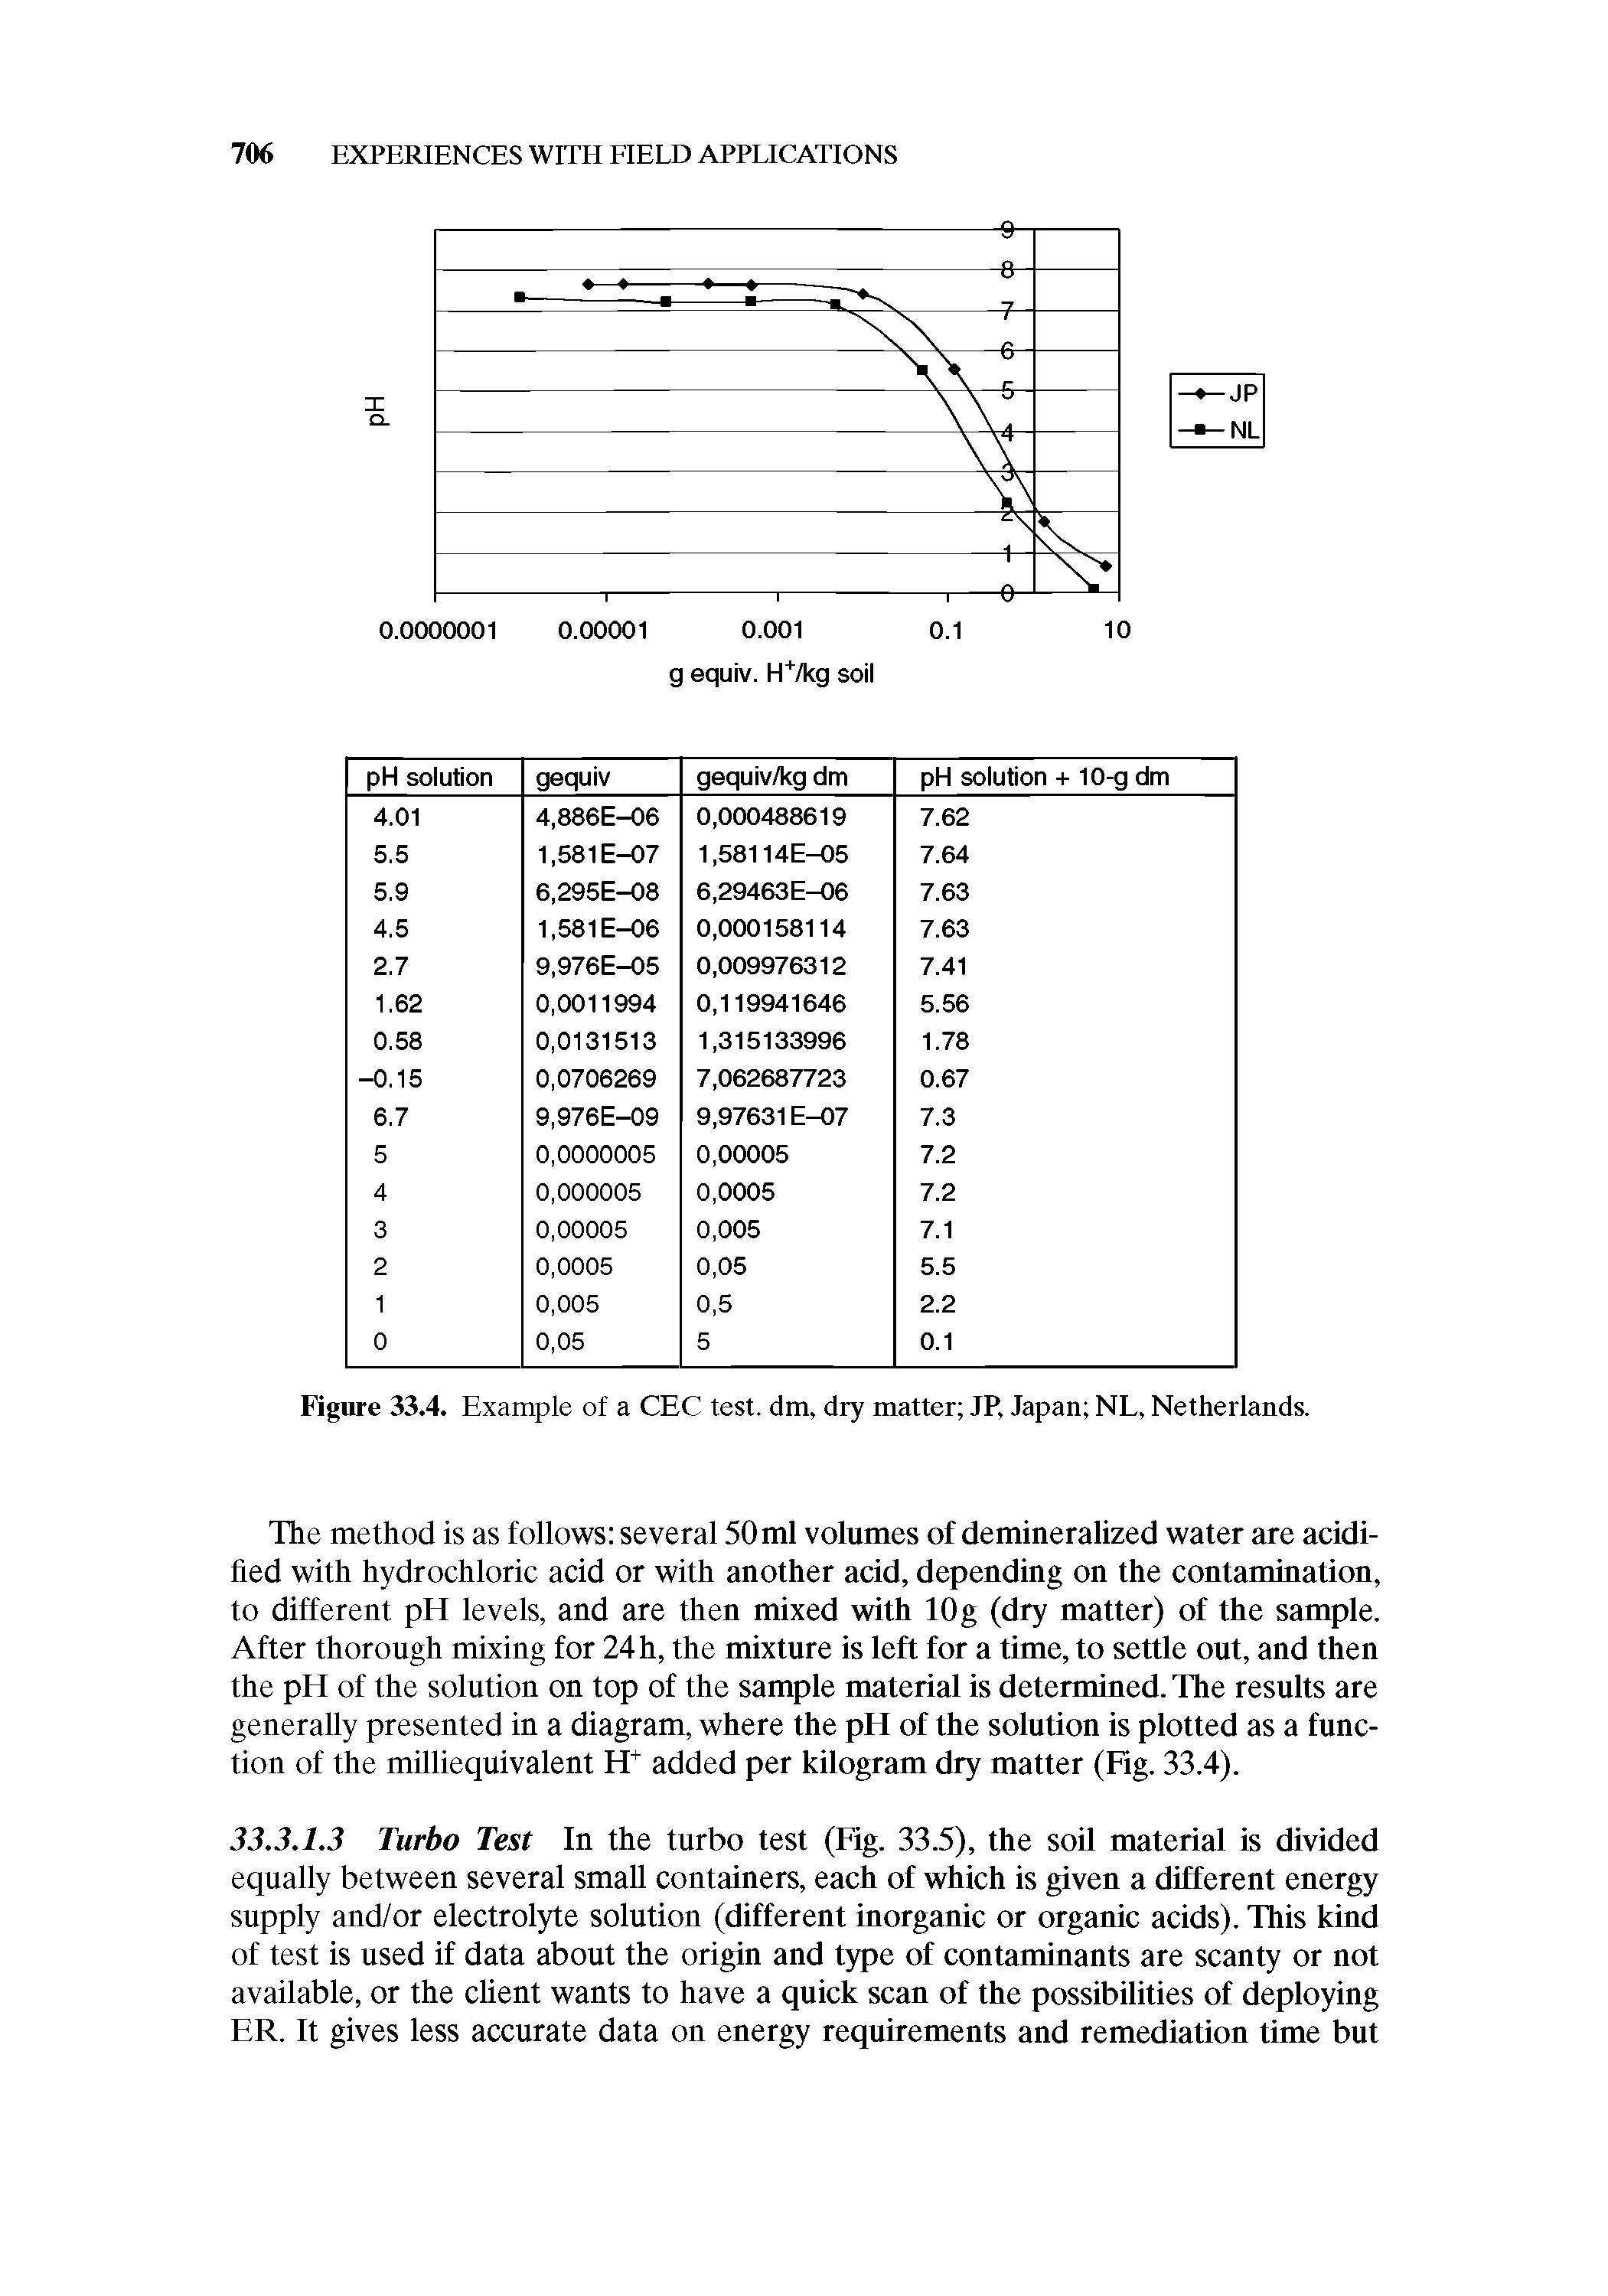 Figure 33.4. Example of a CEC test, dm, dry matter JP, Japan NL, Netherlands.